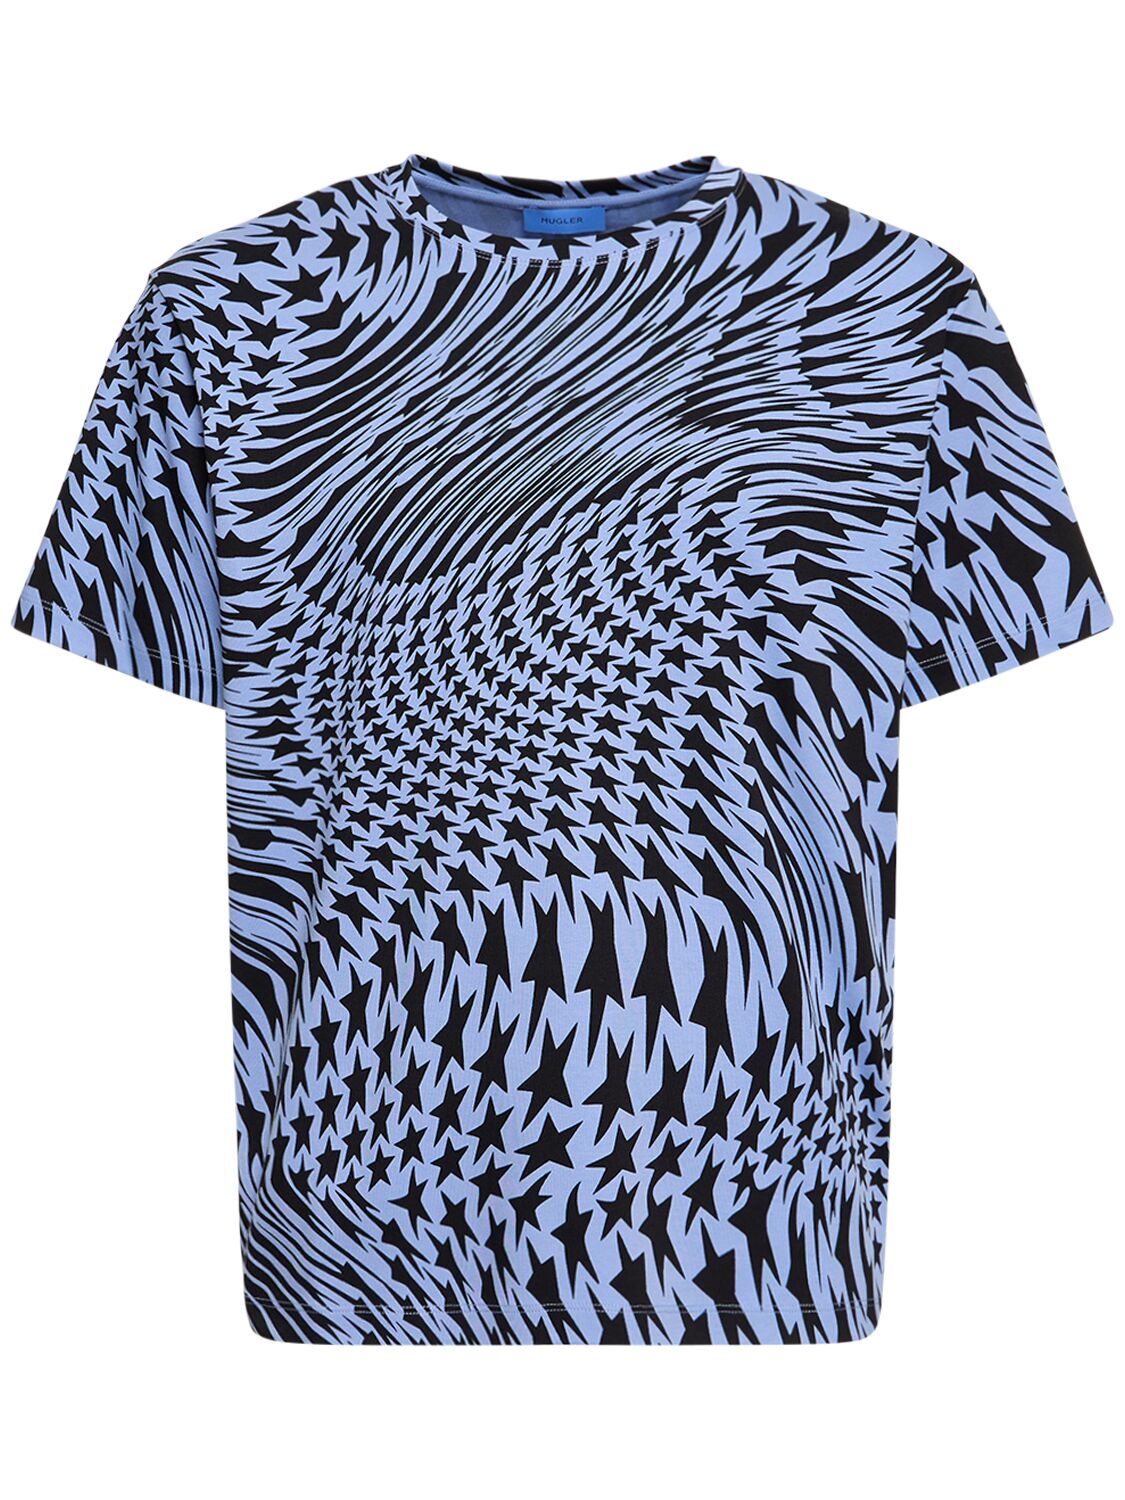 Swirling Star Printed Cotton T-shirt